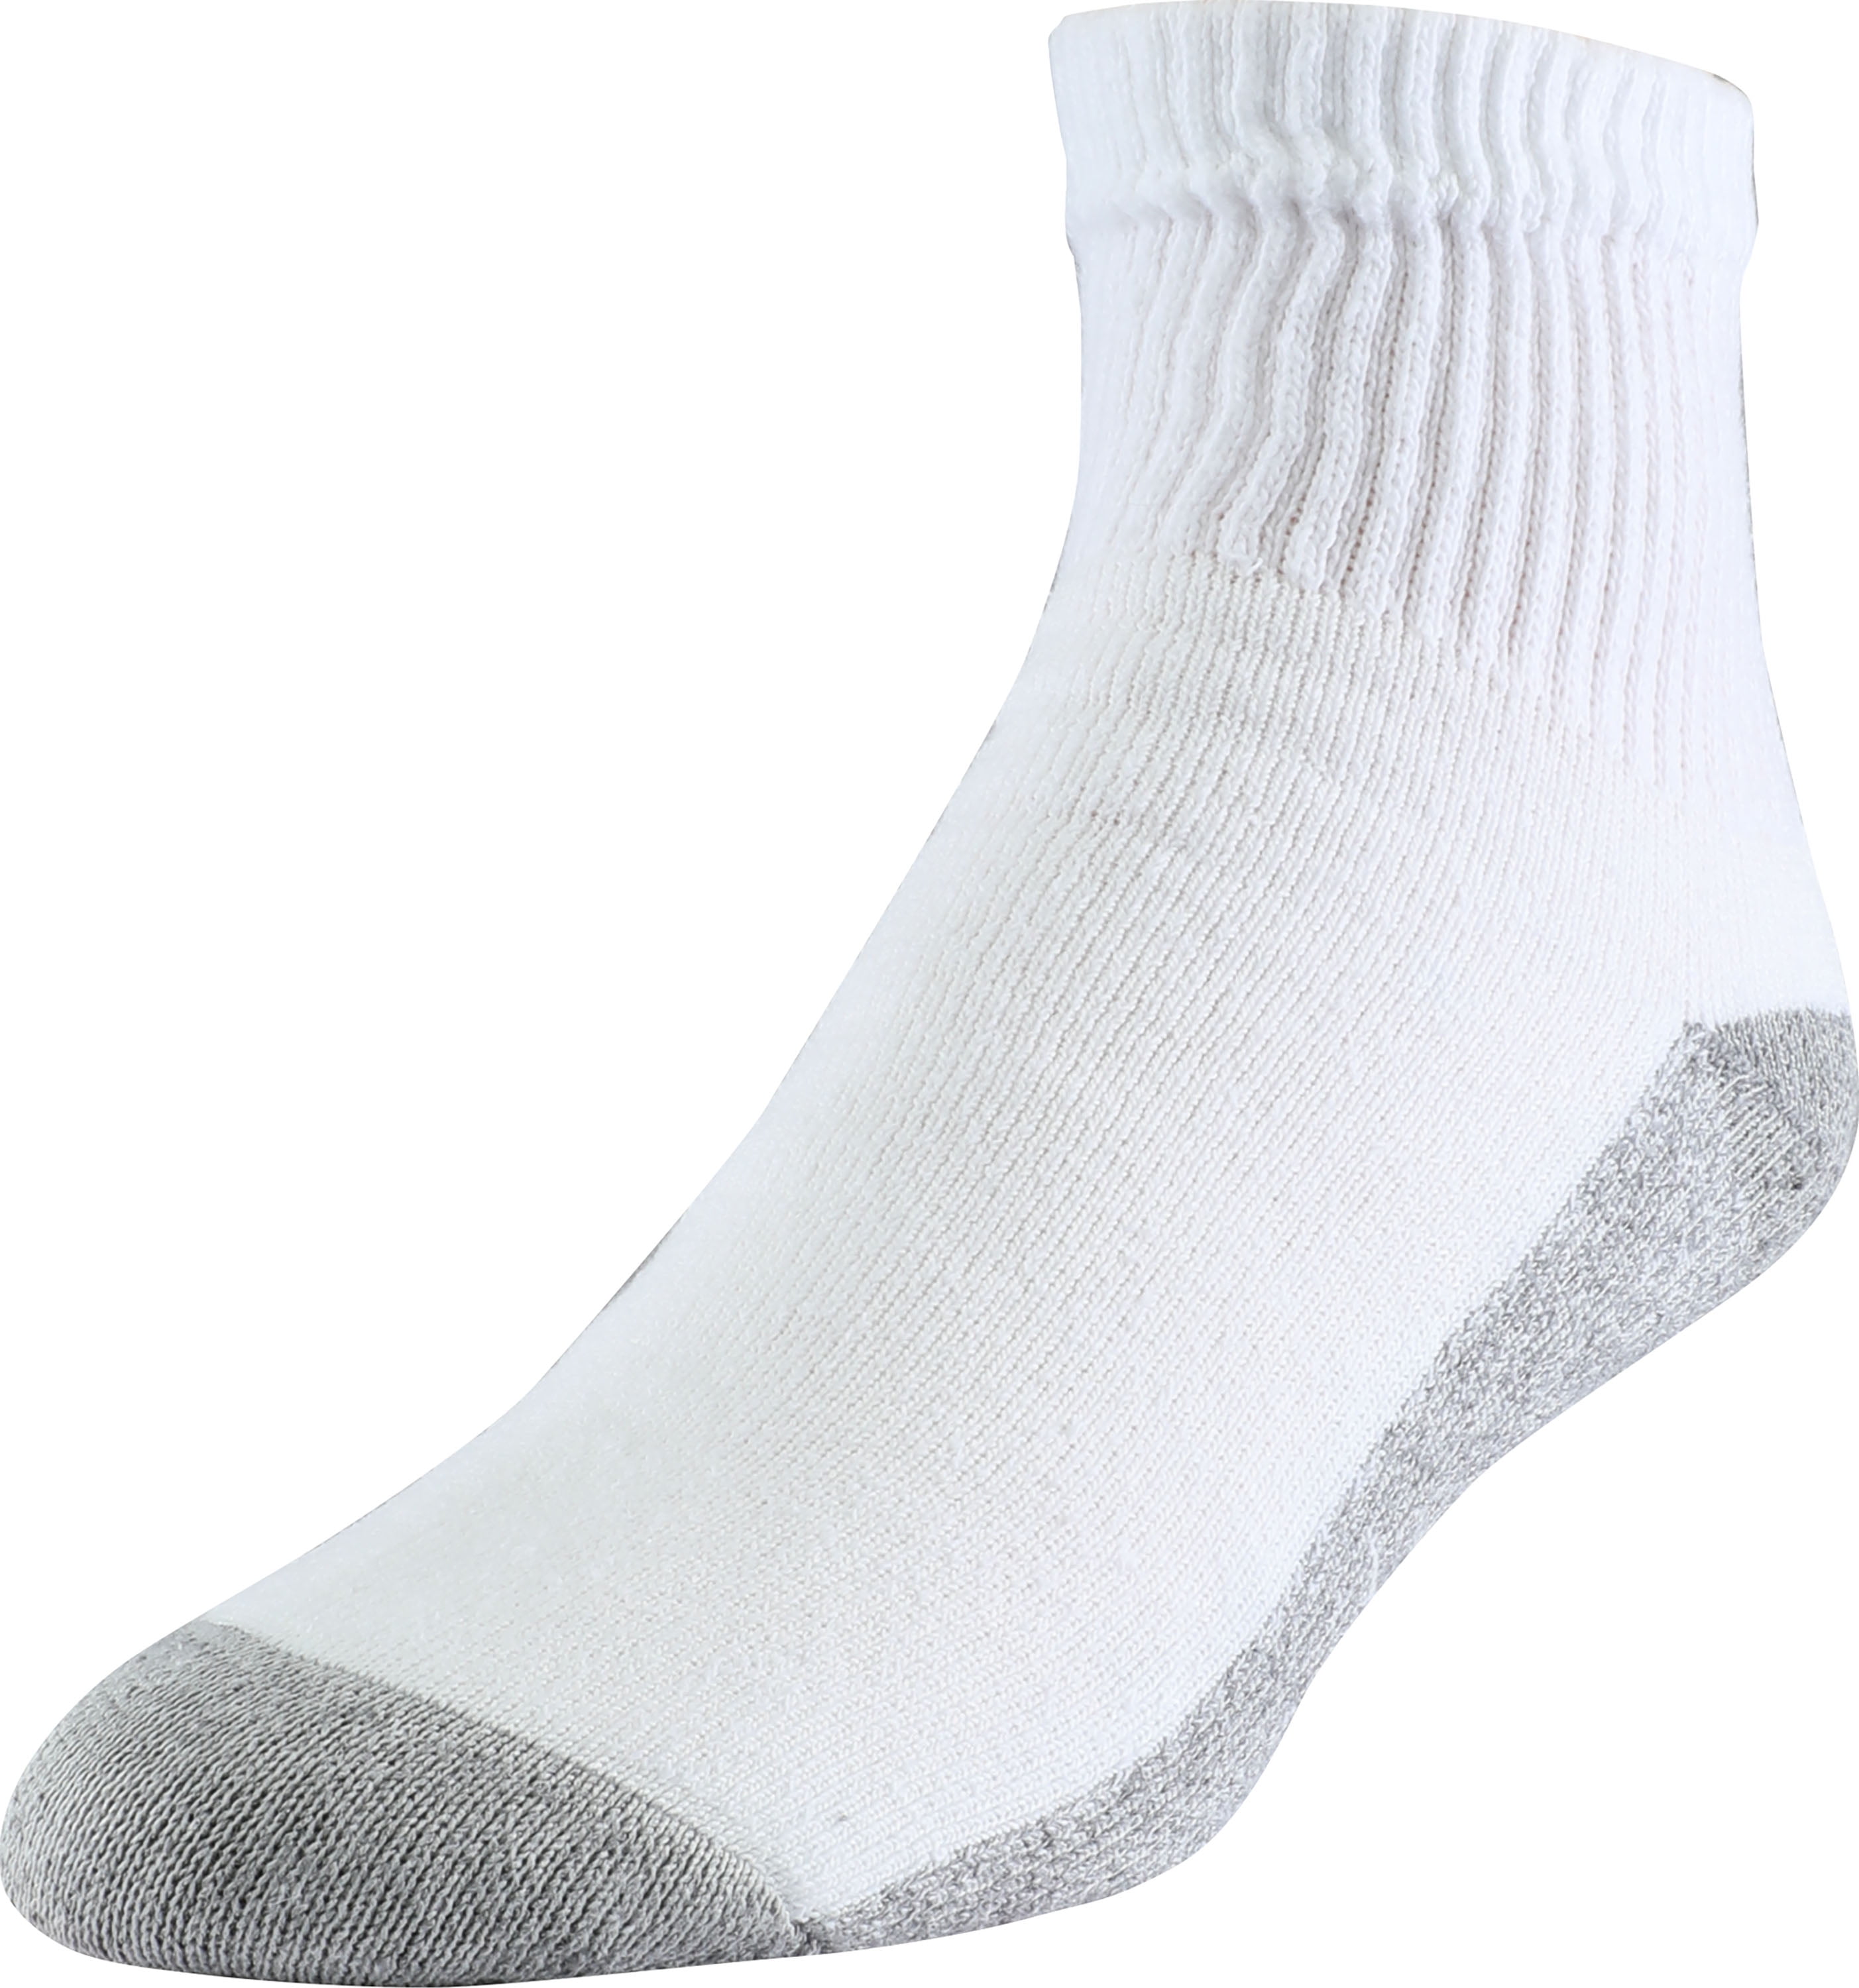 Men's Heavyweight Cushion-Sole White Ankle Socks, 10-pack - Walmart.com